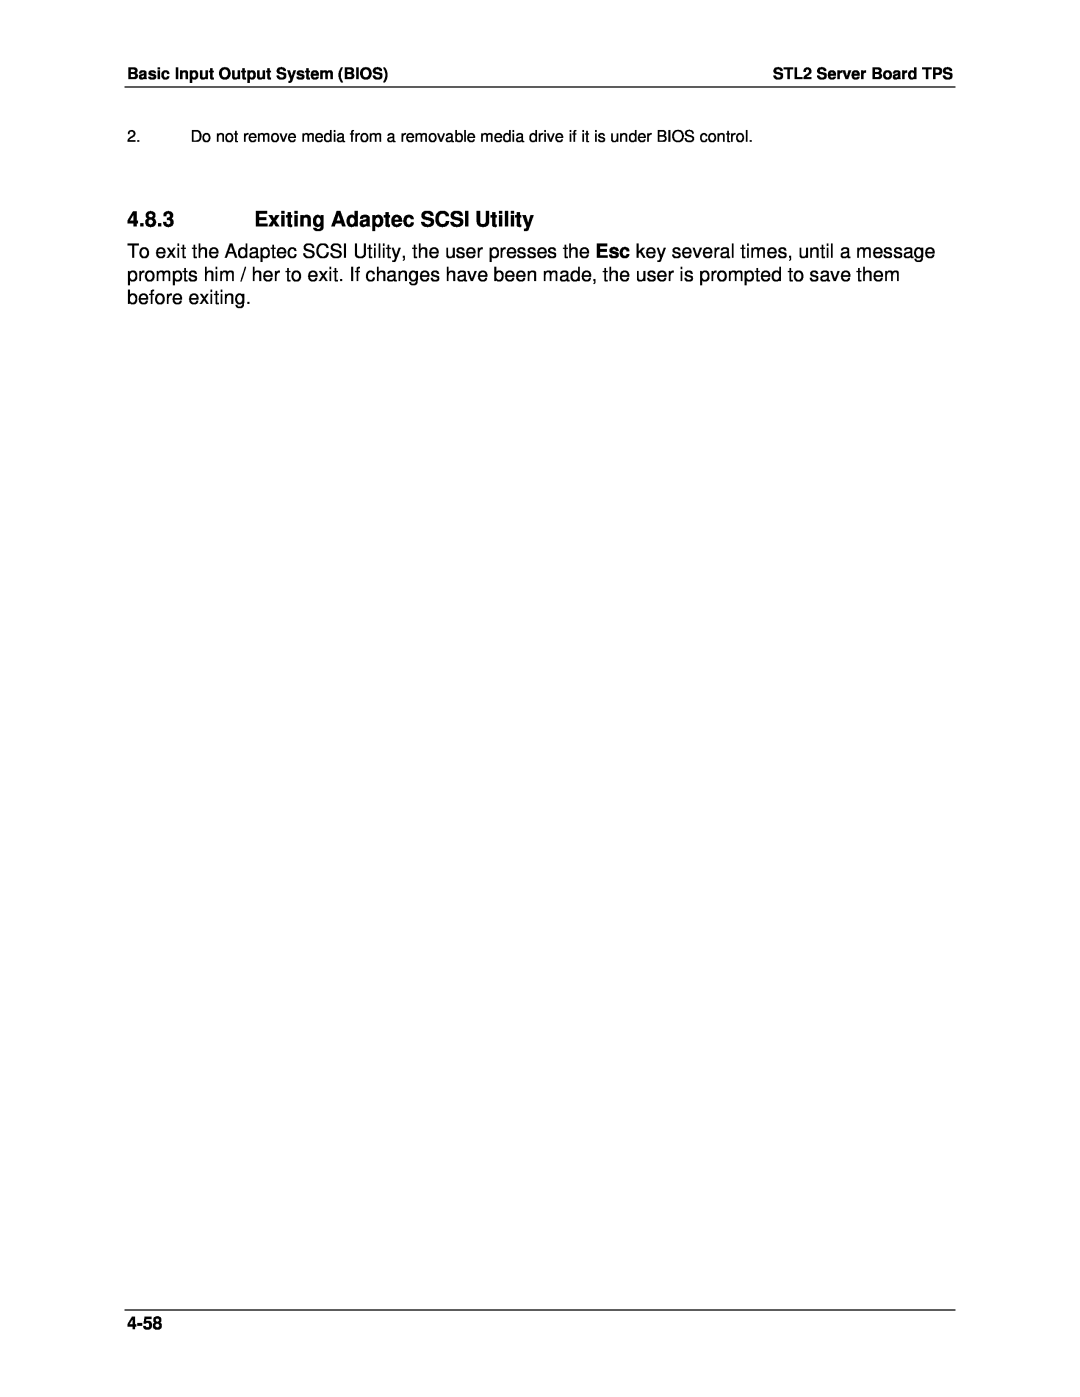 Intel STL2 manual 4.8.3Exiting Adaptec SCSI Utility, 4-58 